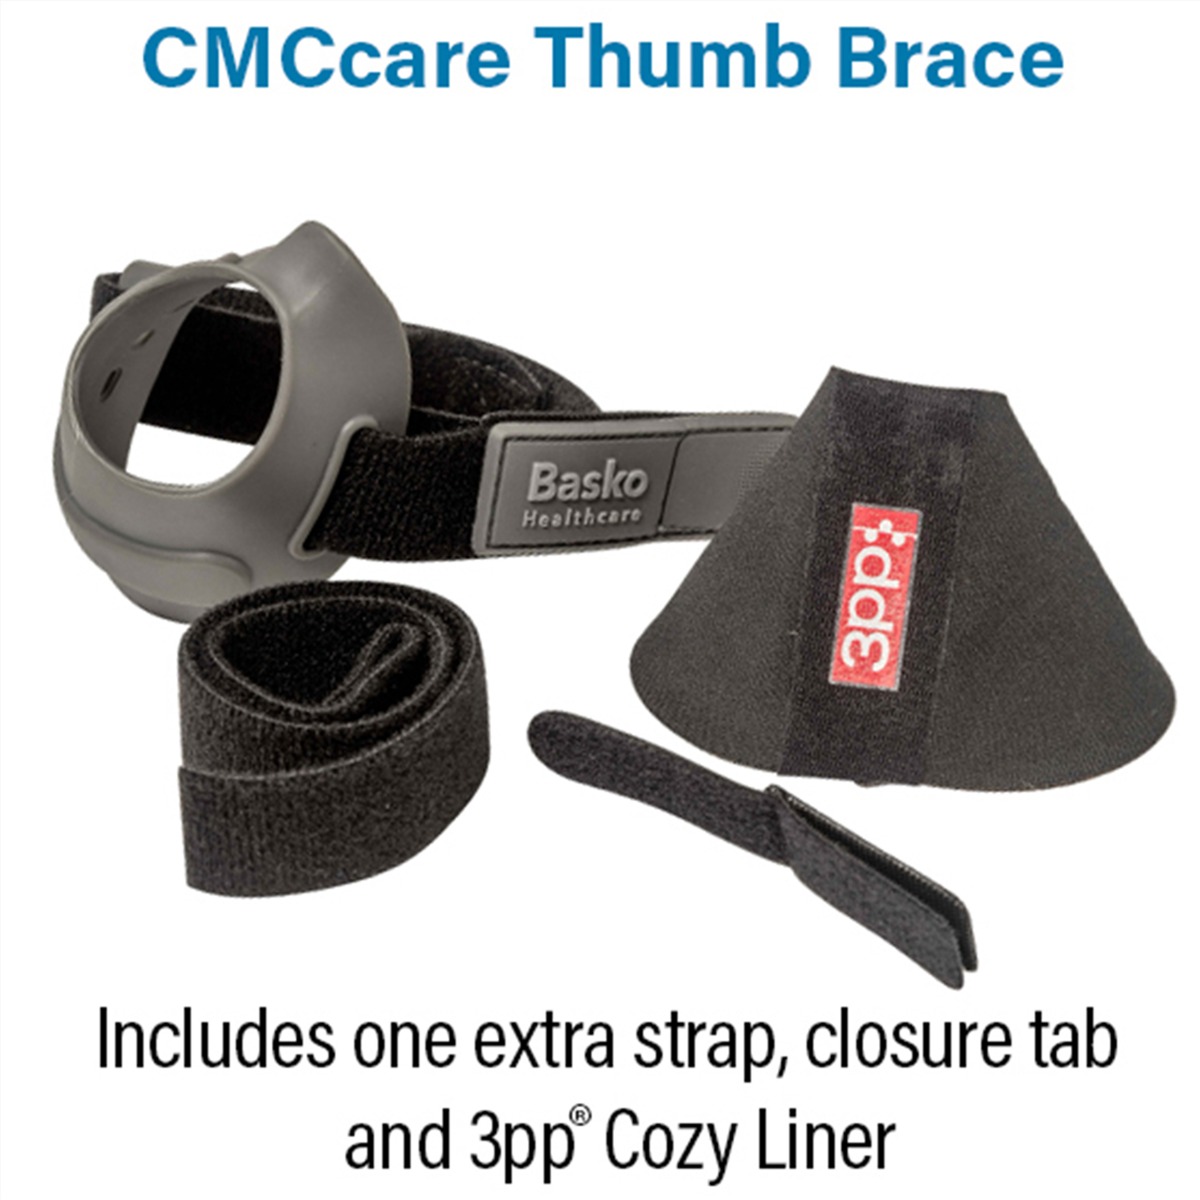 CMCcare Thumb Brace